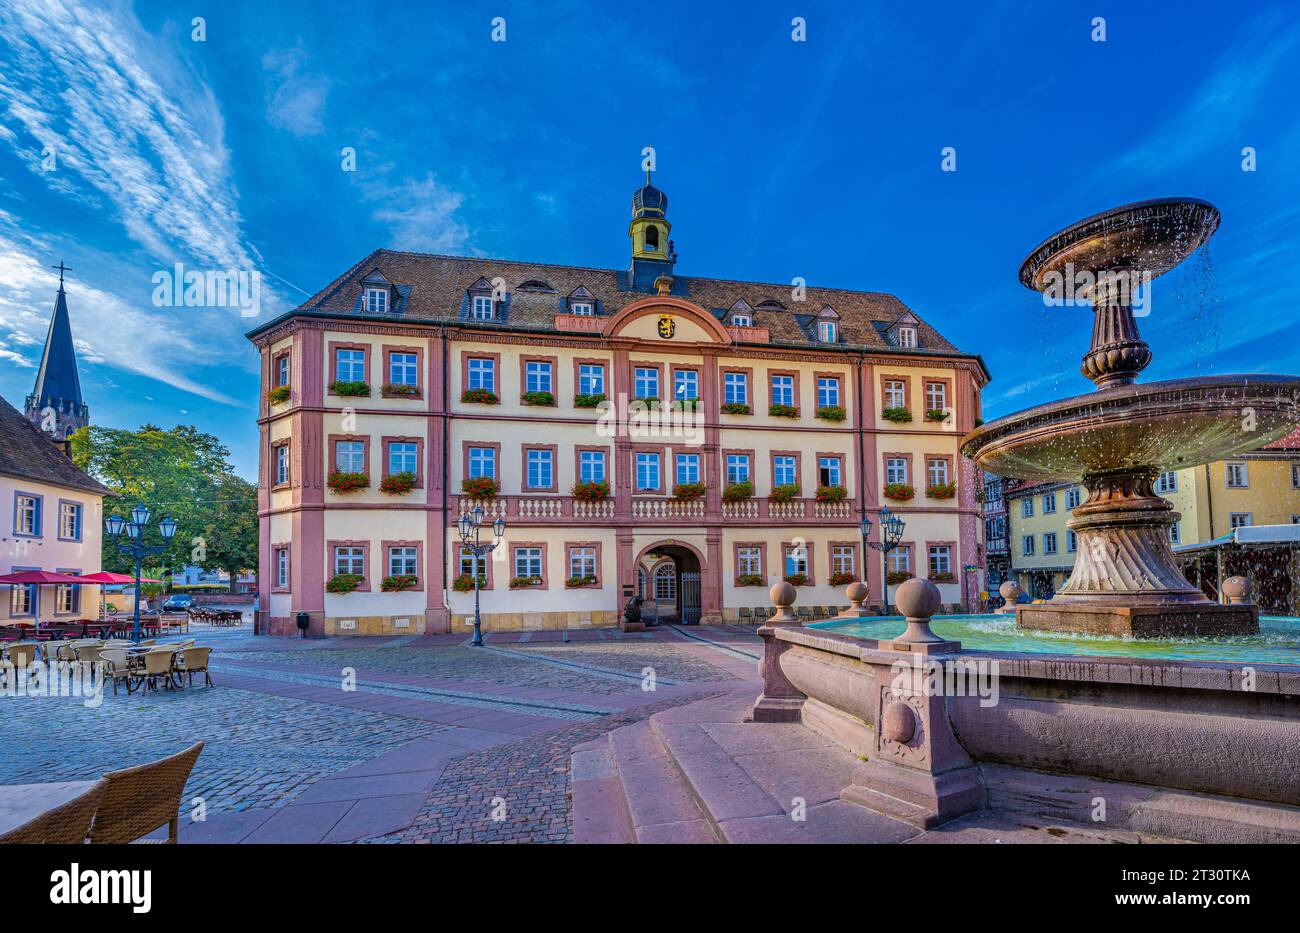 City Hall, Market Square, Neustadt an der Weinstraße, Palatinate, Rhineland-Palatinate, Germany, Europe Stock Photo